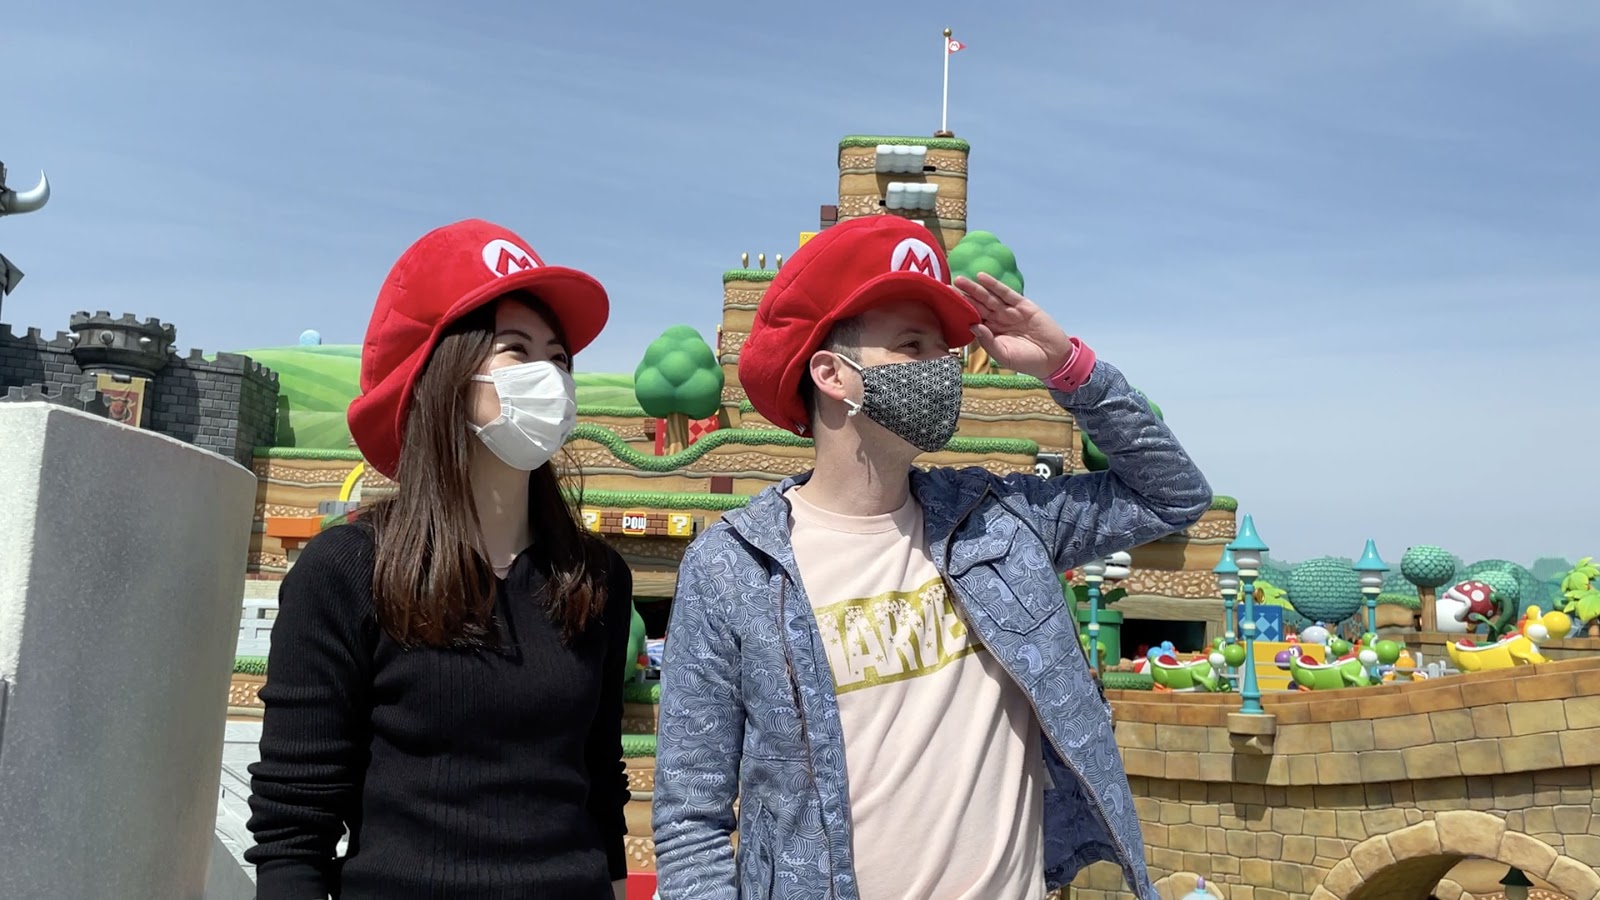 Remembering Super Mario World - Feature - Nintendo World Report